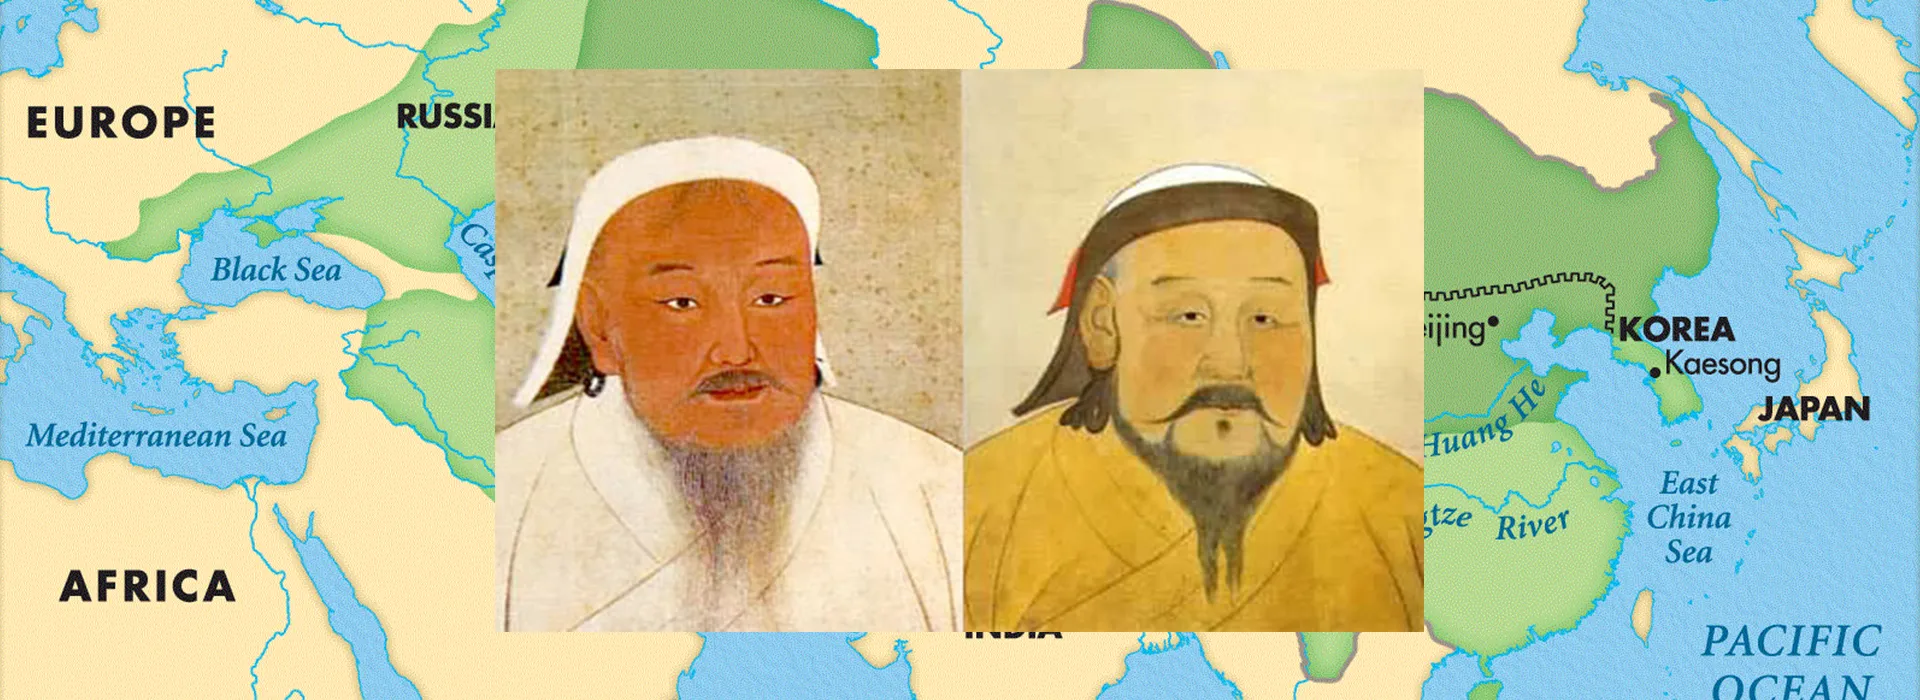 Genghis Khan and Kublai Khan topic